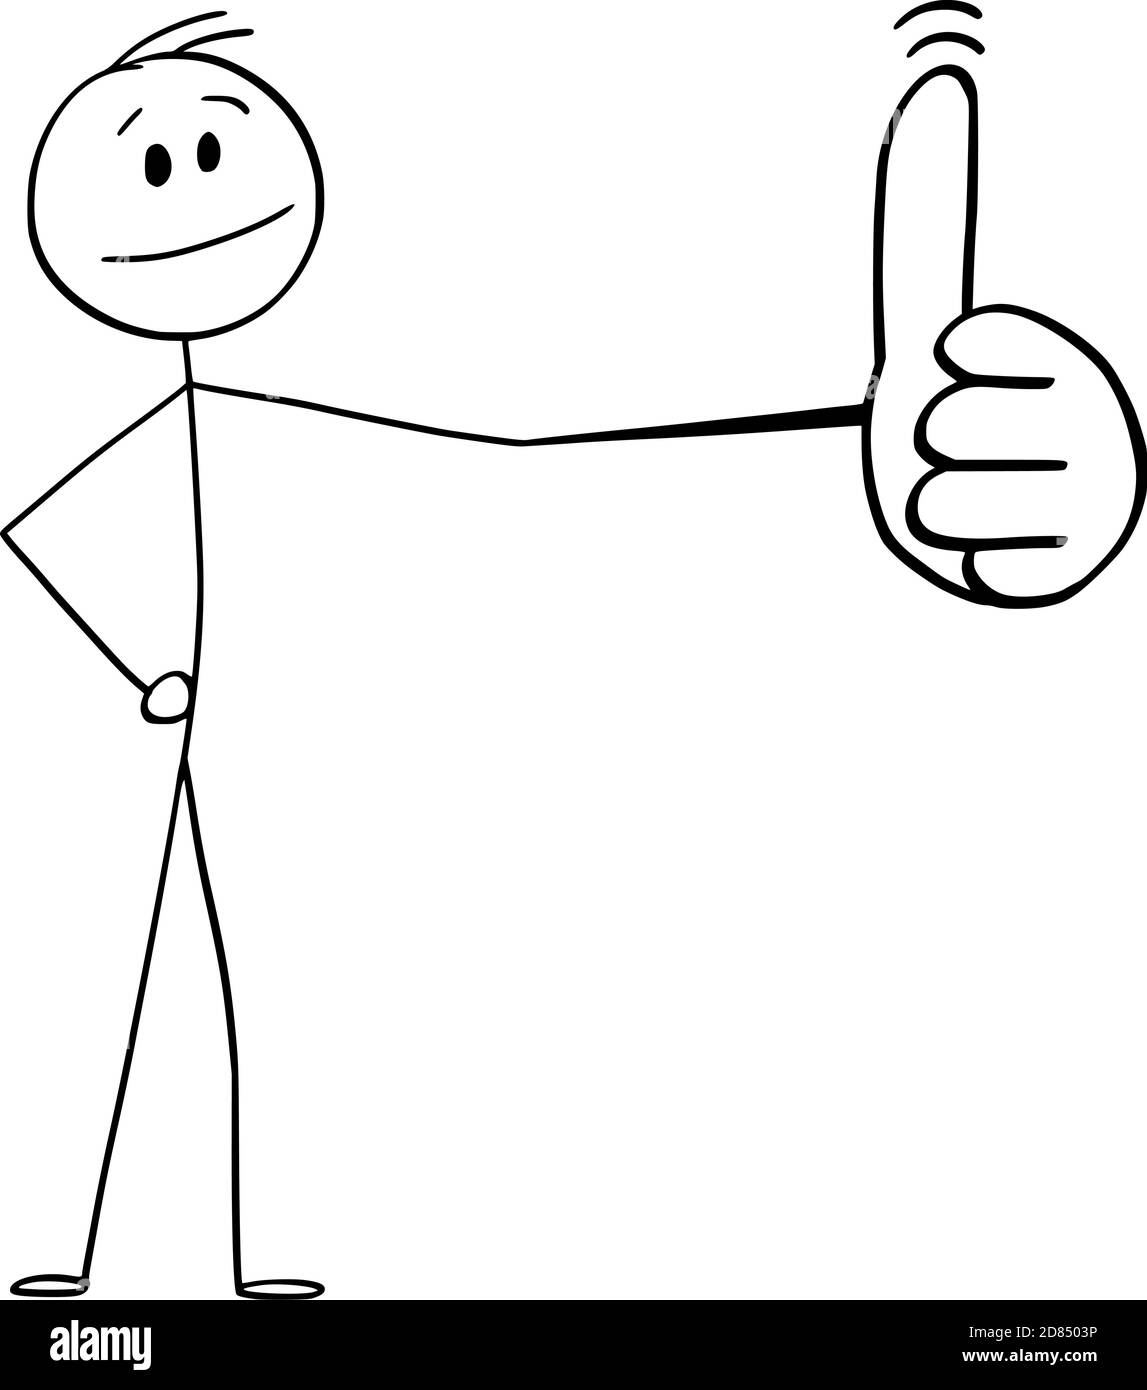 Vector cartoon stick figure illustration of man or businessman